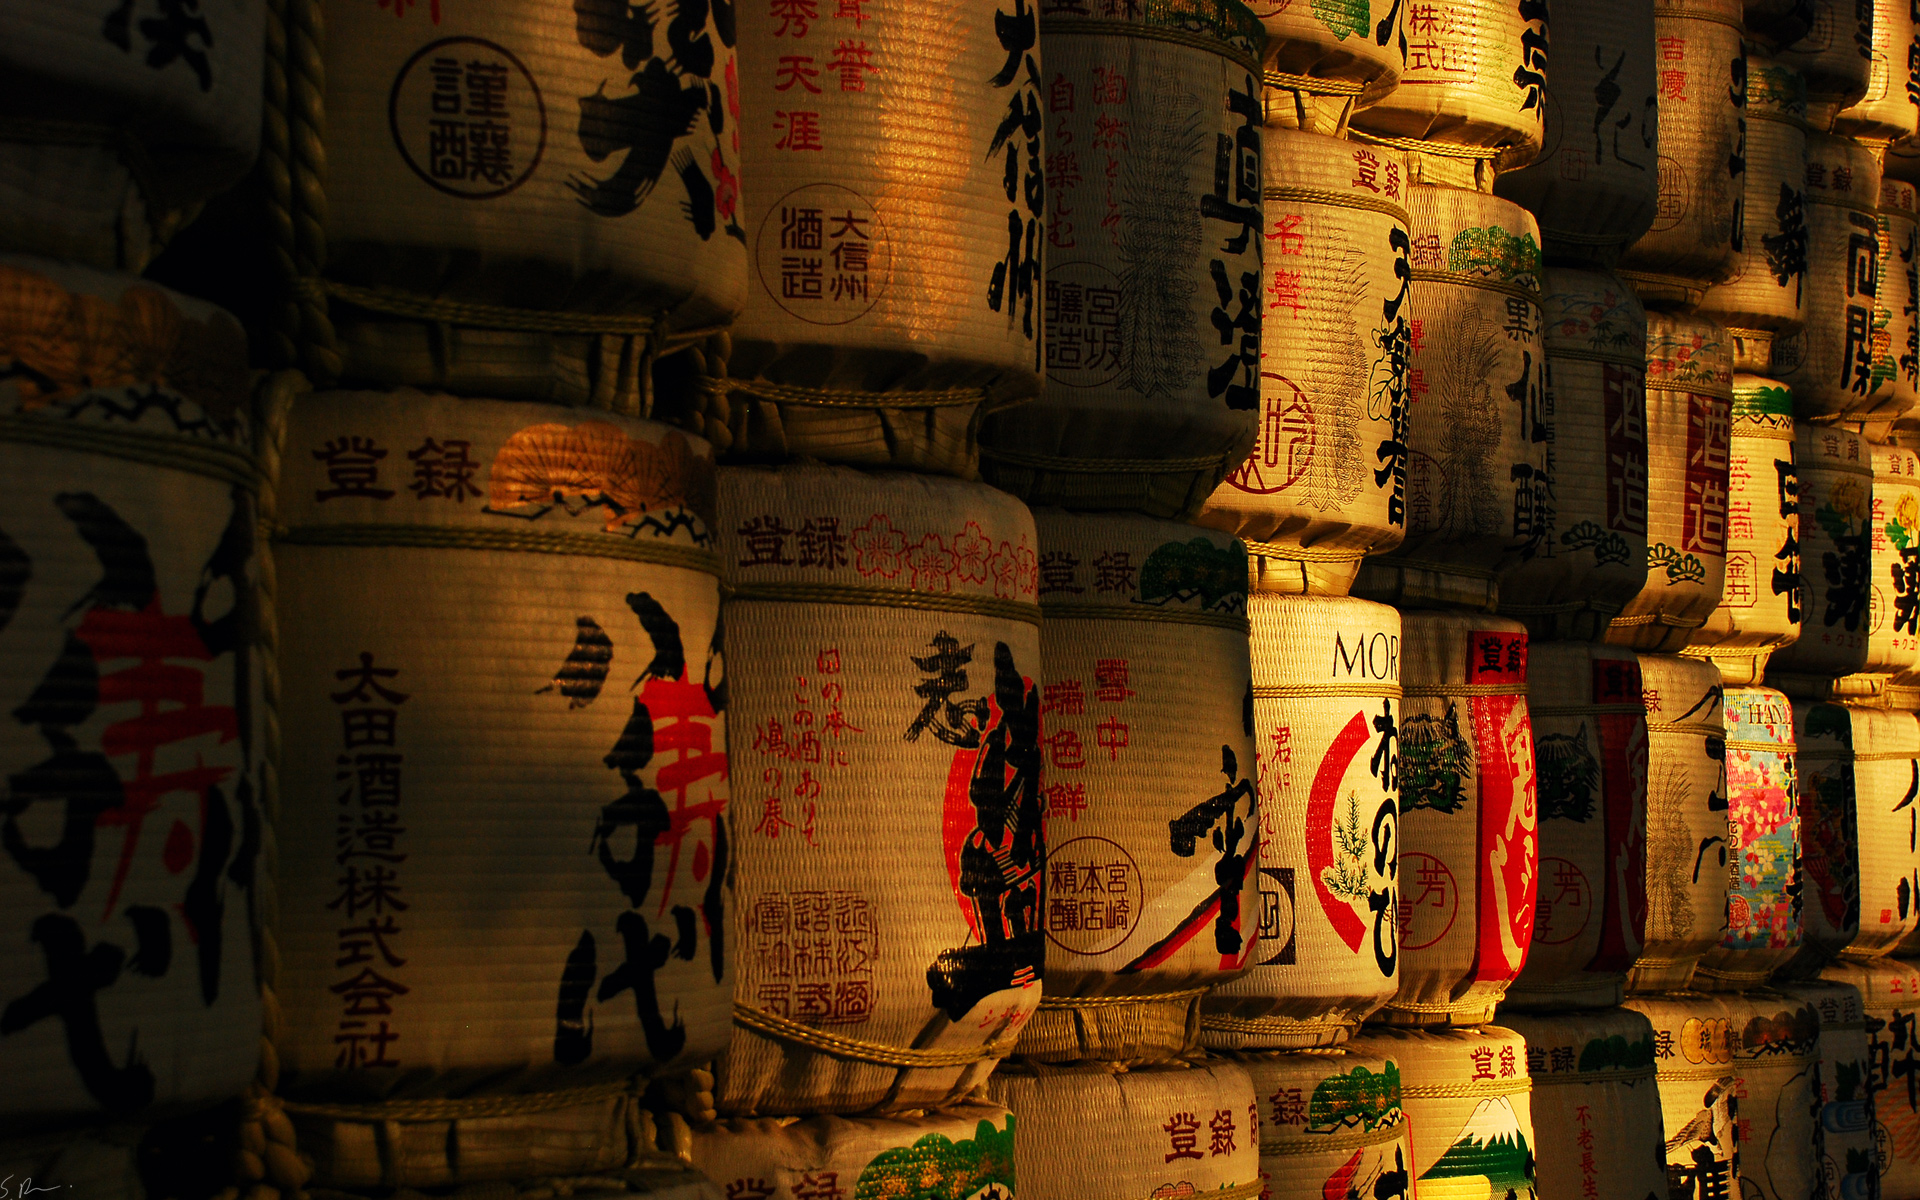 Japan, alcohol, Japanese, Japanese gardens, stores, sake, barrels - desktop wallpaper